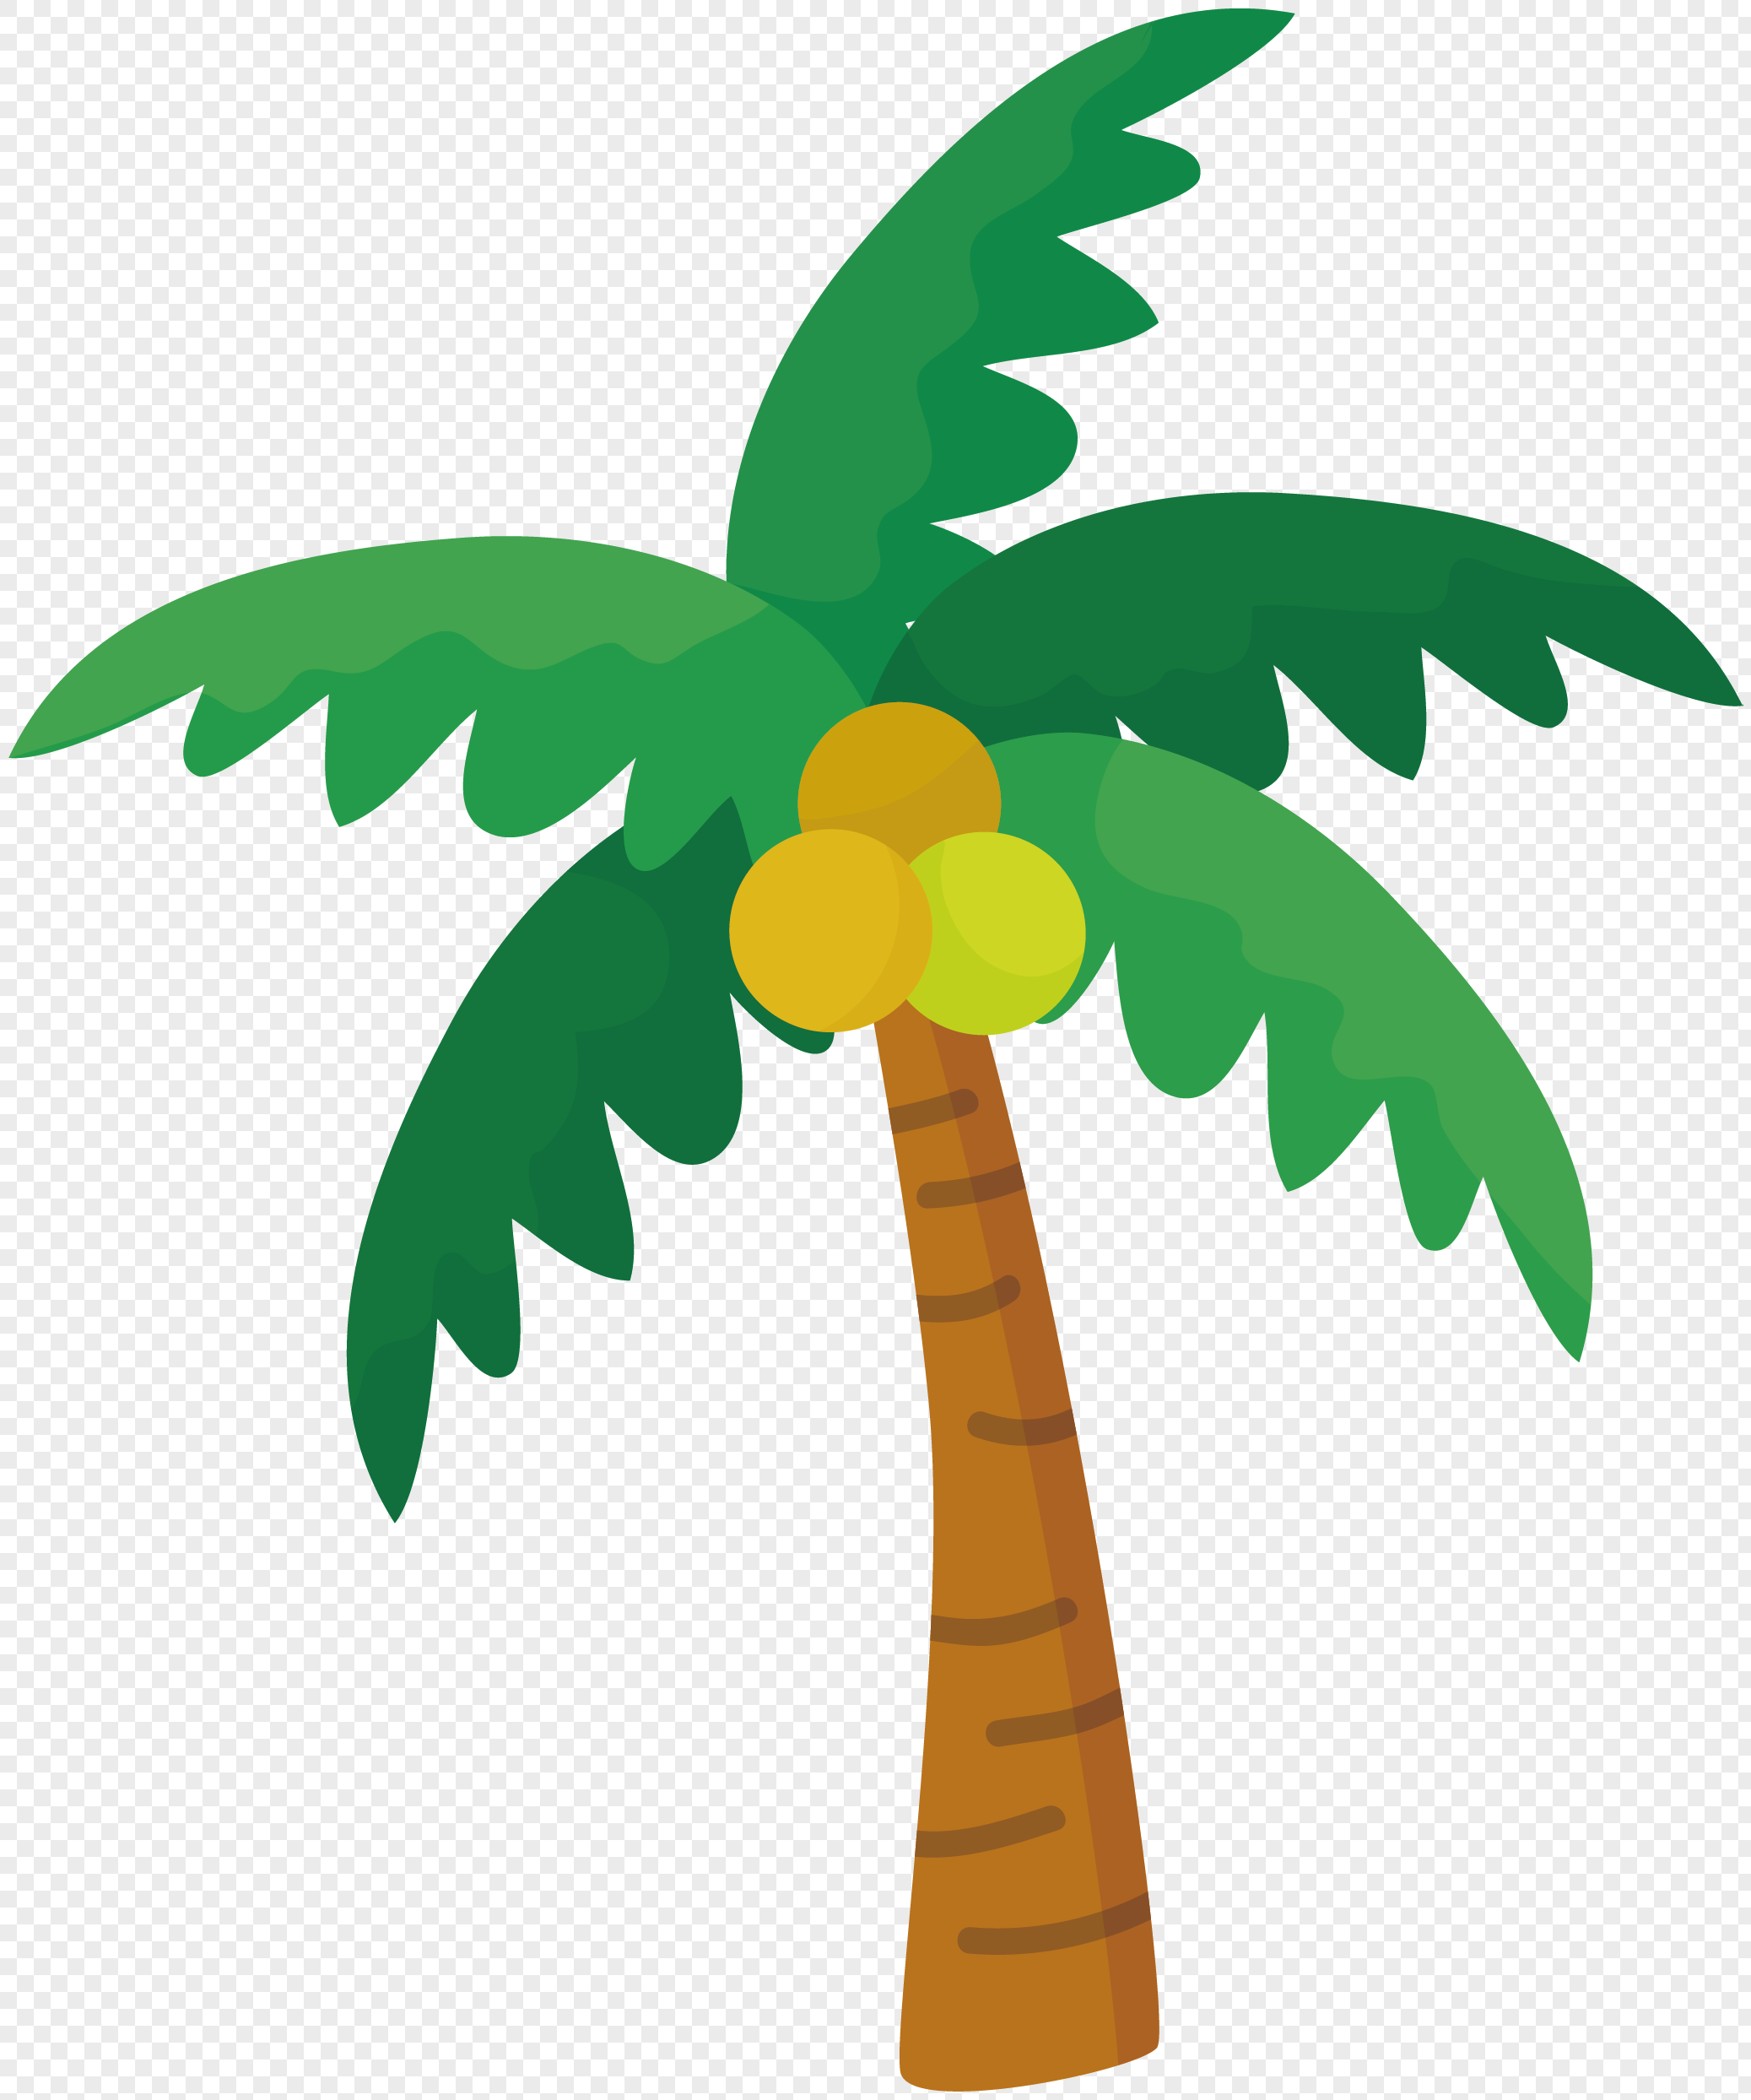 Coconut Tree Vector - Two Silhouette Coconut Tree Vector Illustration